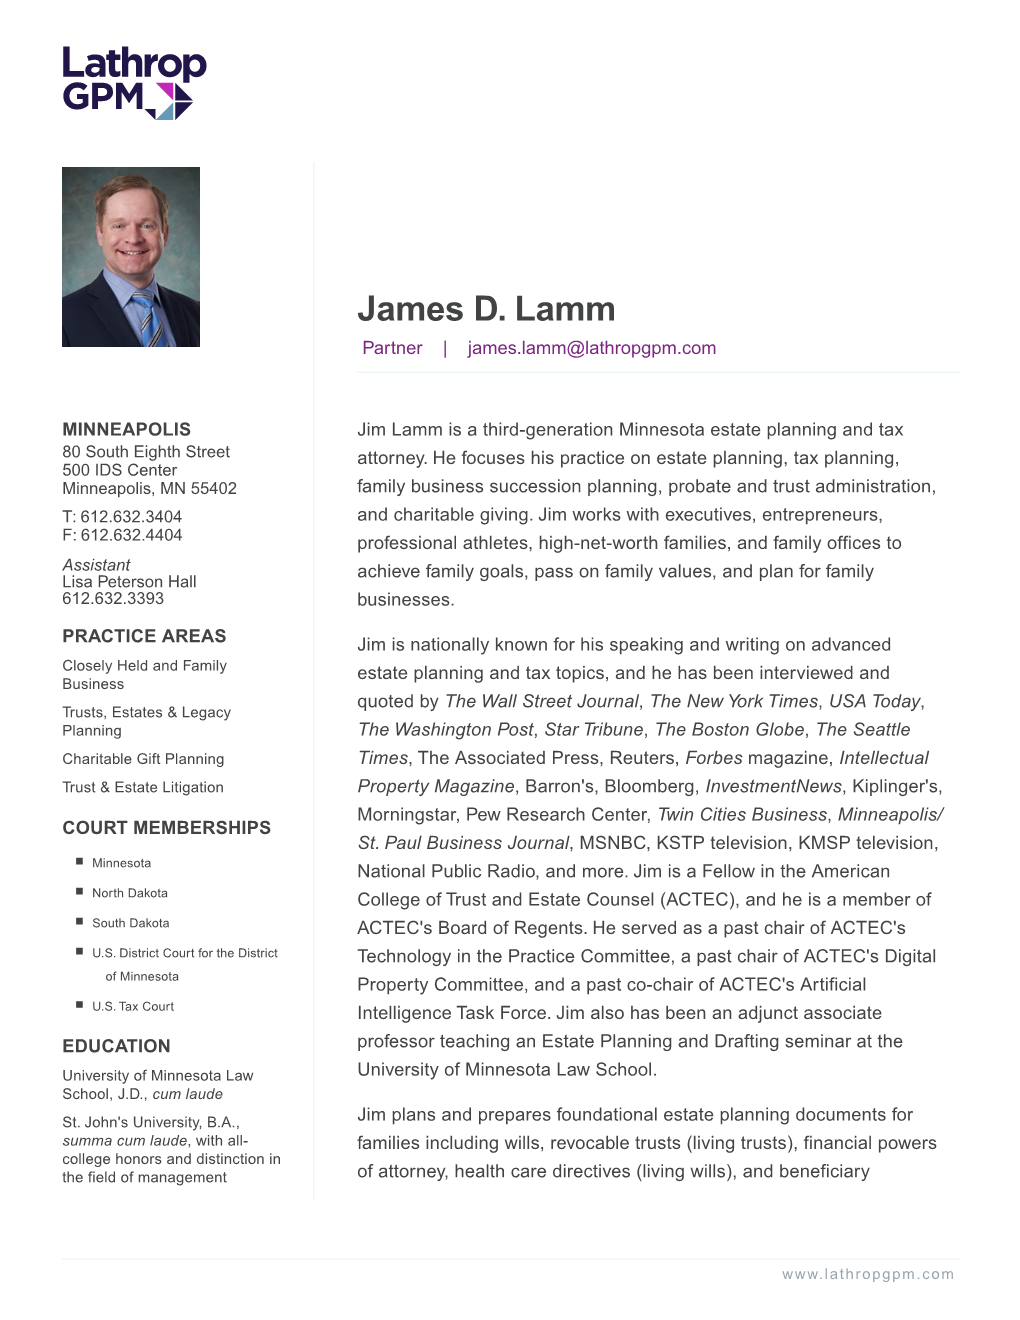 James D. Lamm Partner | James.Lamm@Lathropgpm.Com